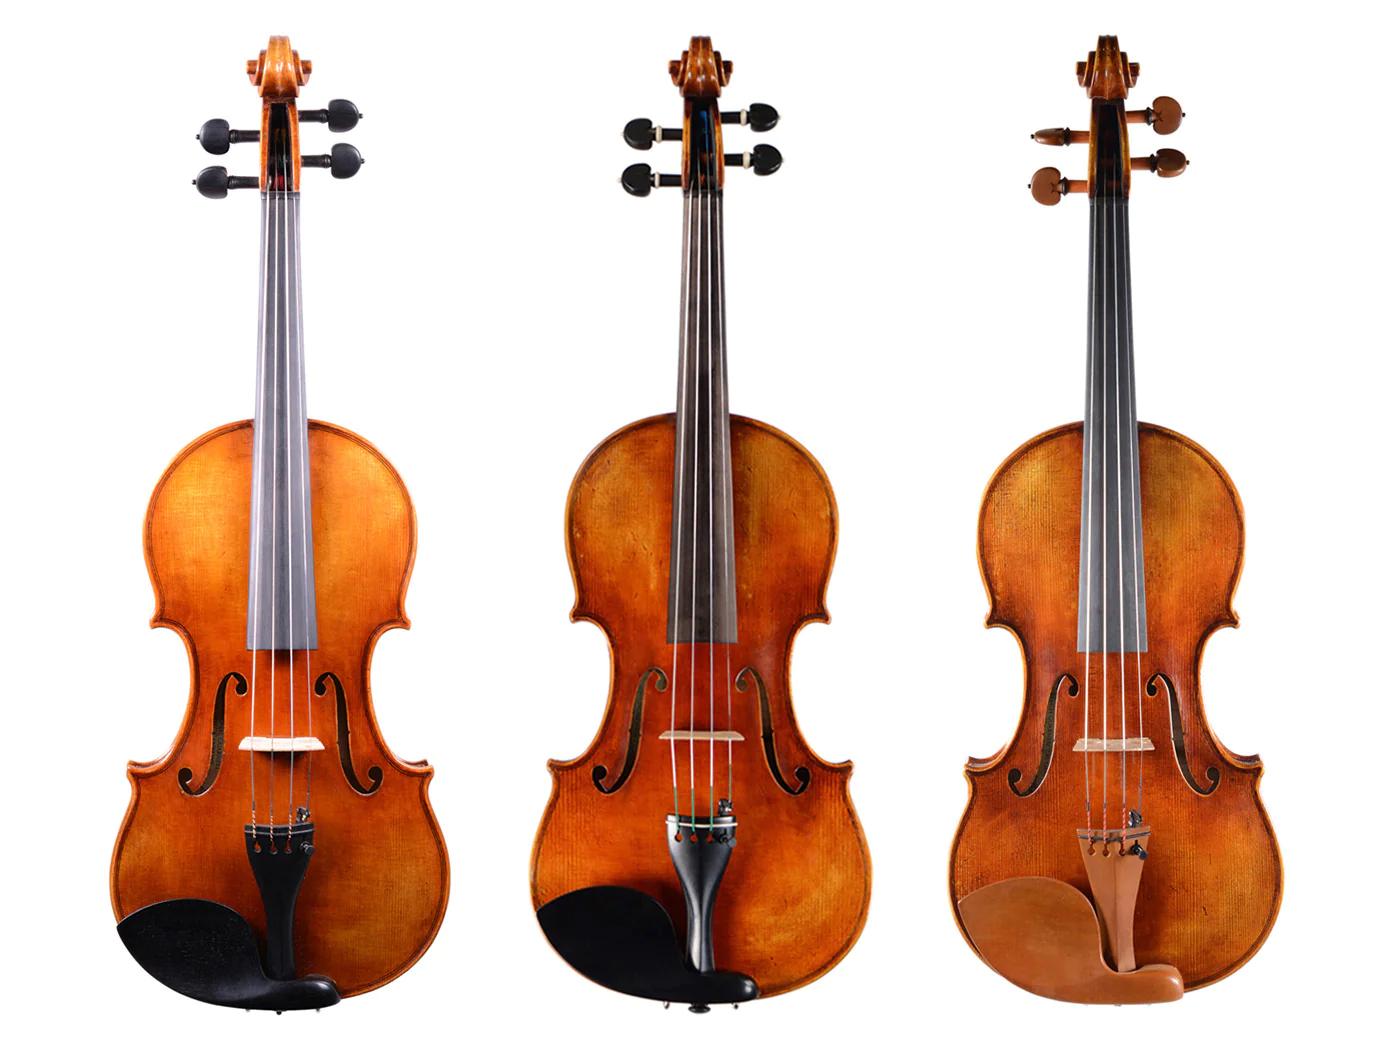 holstein violins - What is the Holstein German virtuoso violin